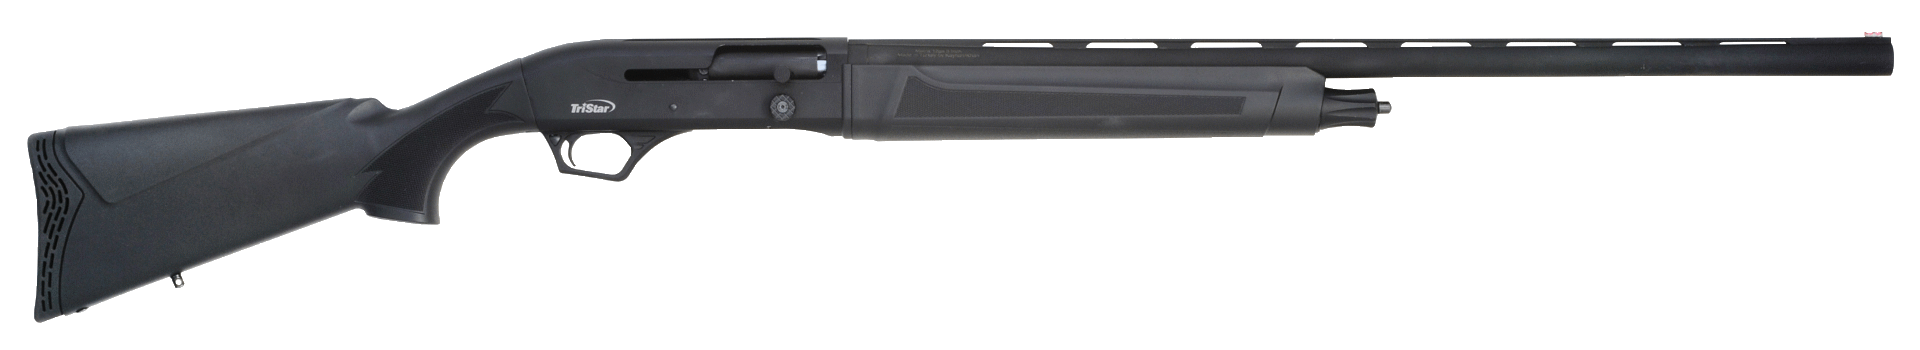 TriStar Arms' First Inertia-Driven Shotgun Line - Matrix